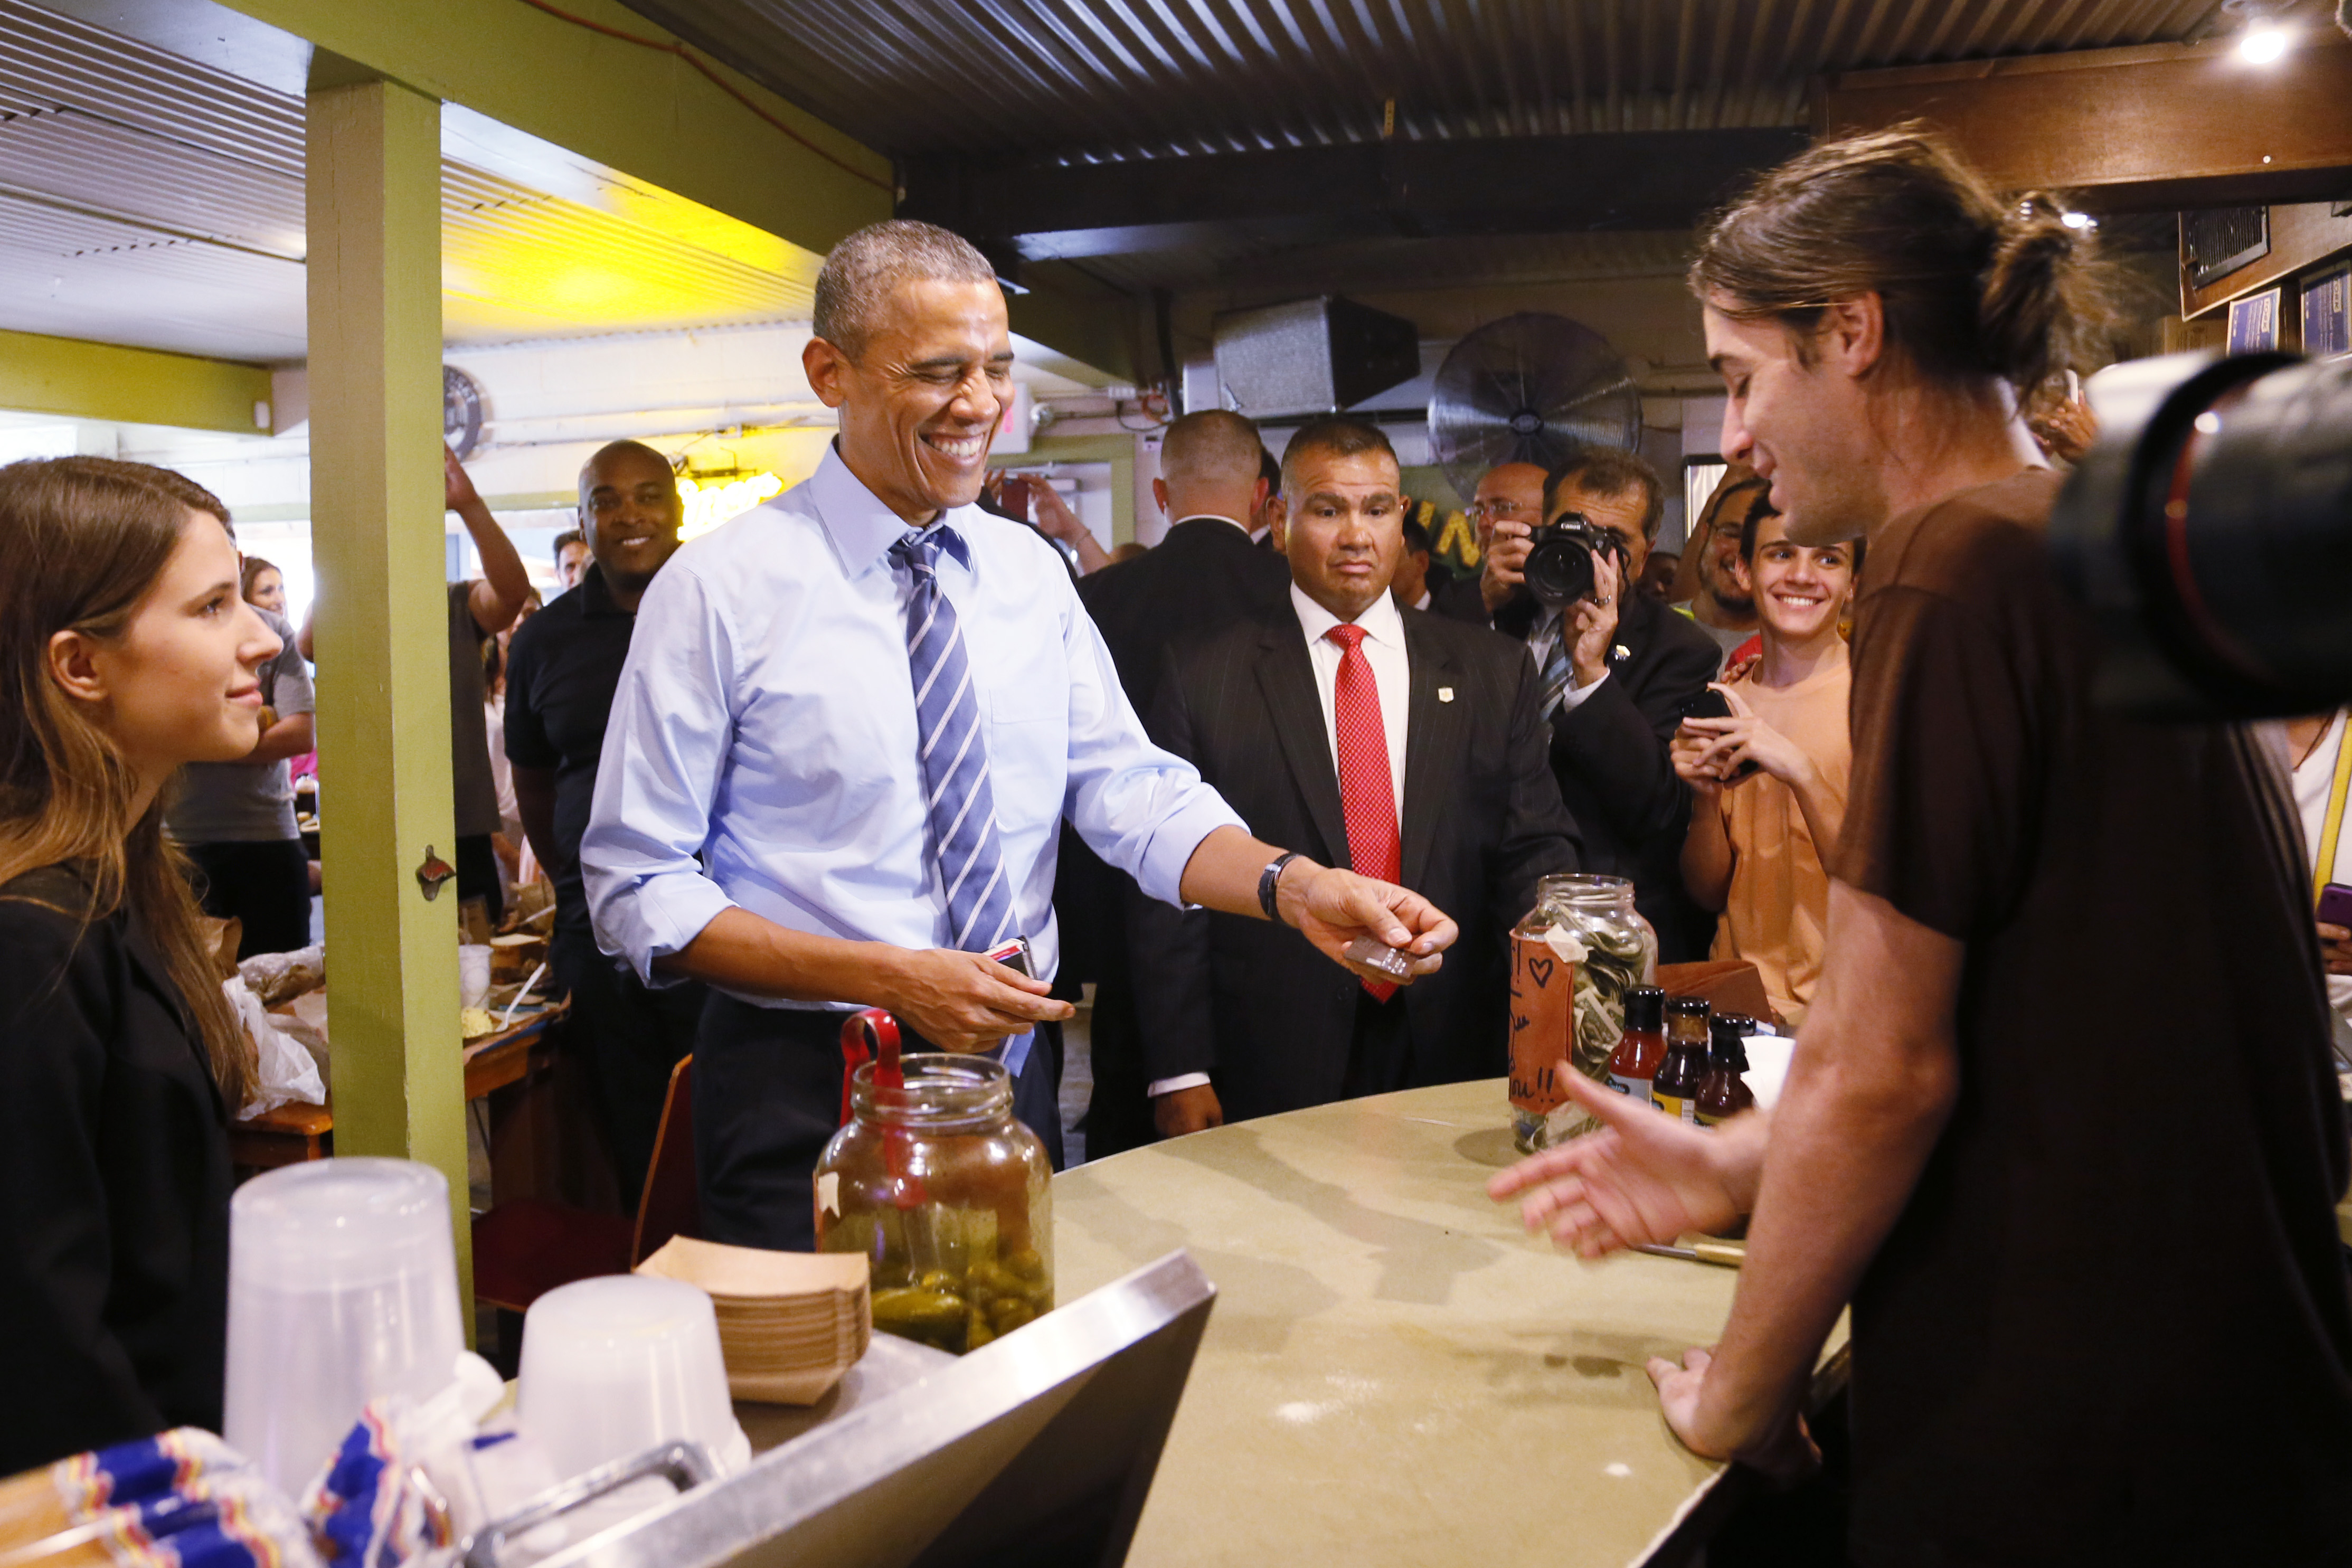 Obama Rewards Texas BBQ Cashiers Gay Rights Joke With A Fist Bump